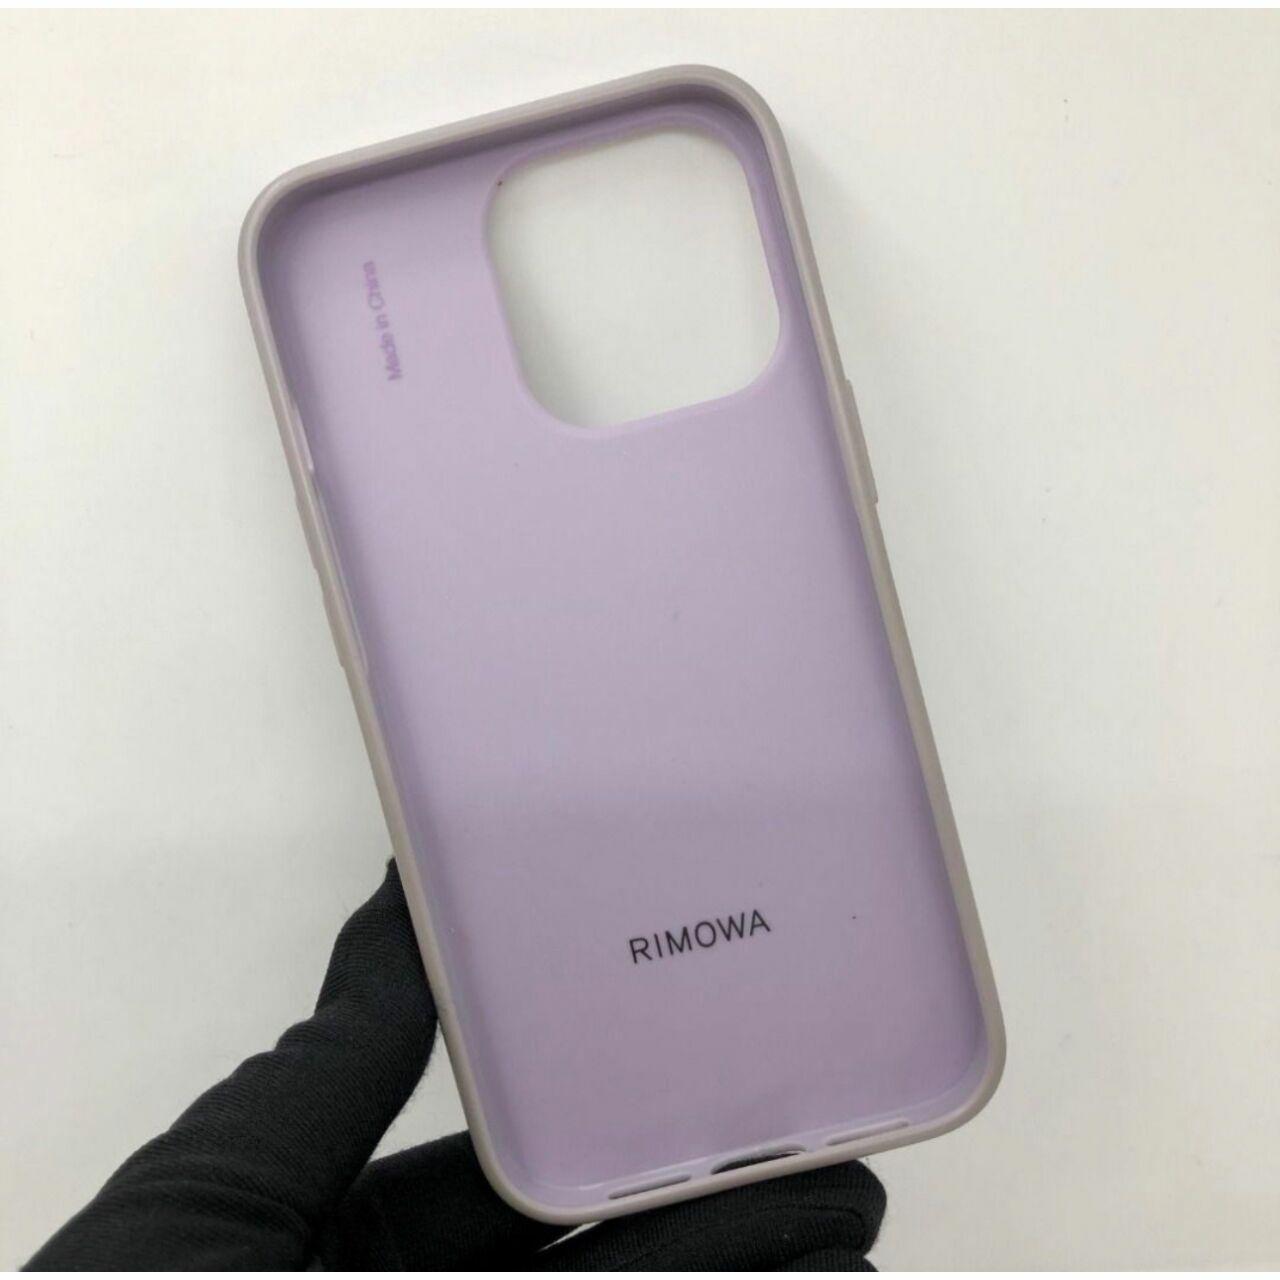 Rimowa Purple Iphone 13 Pro Phone Case